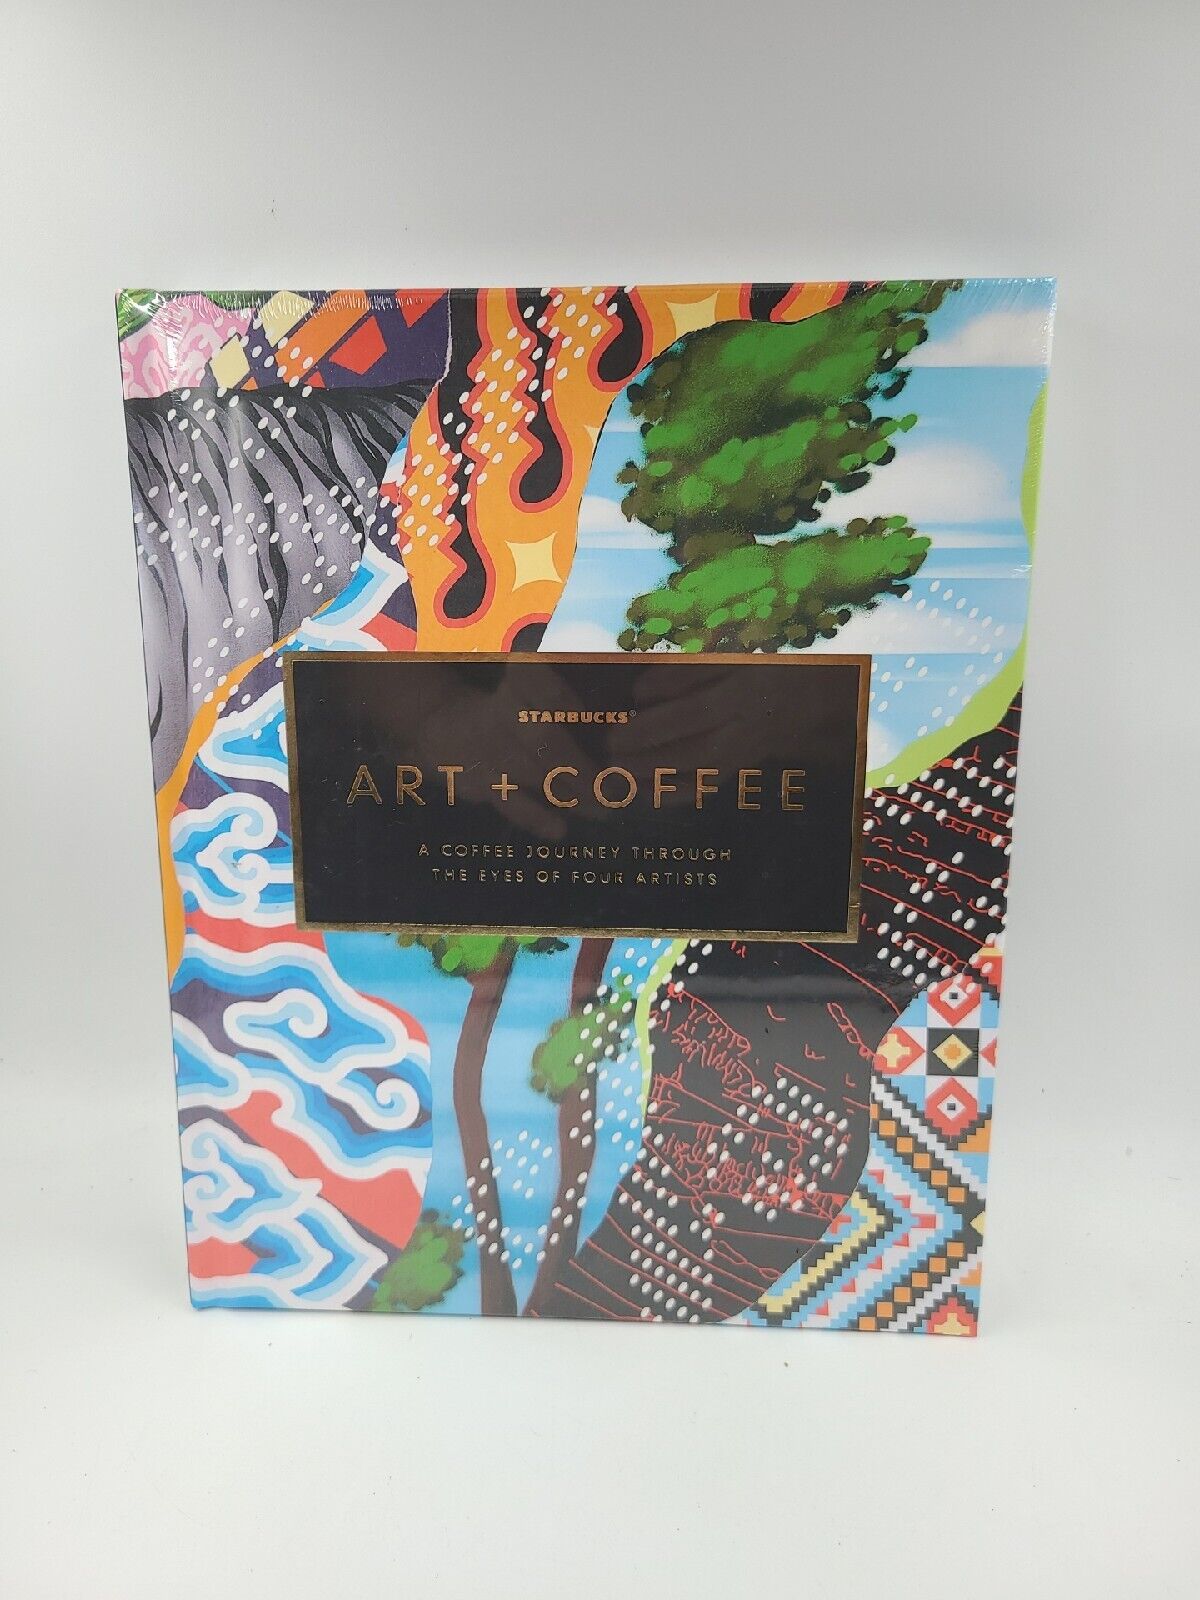 STARBUCKS ART + COFFEE BOOK Coffee Journey Through Eyes Of Four Artists NEW